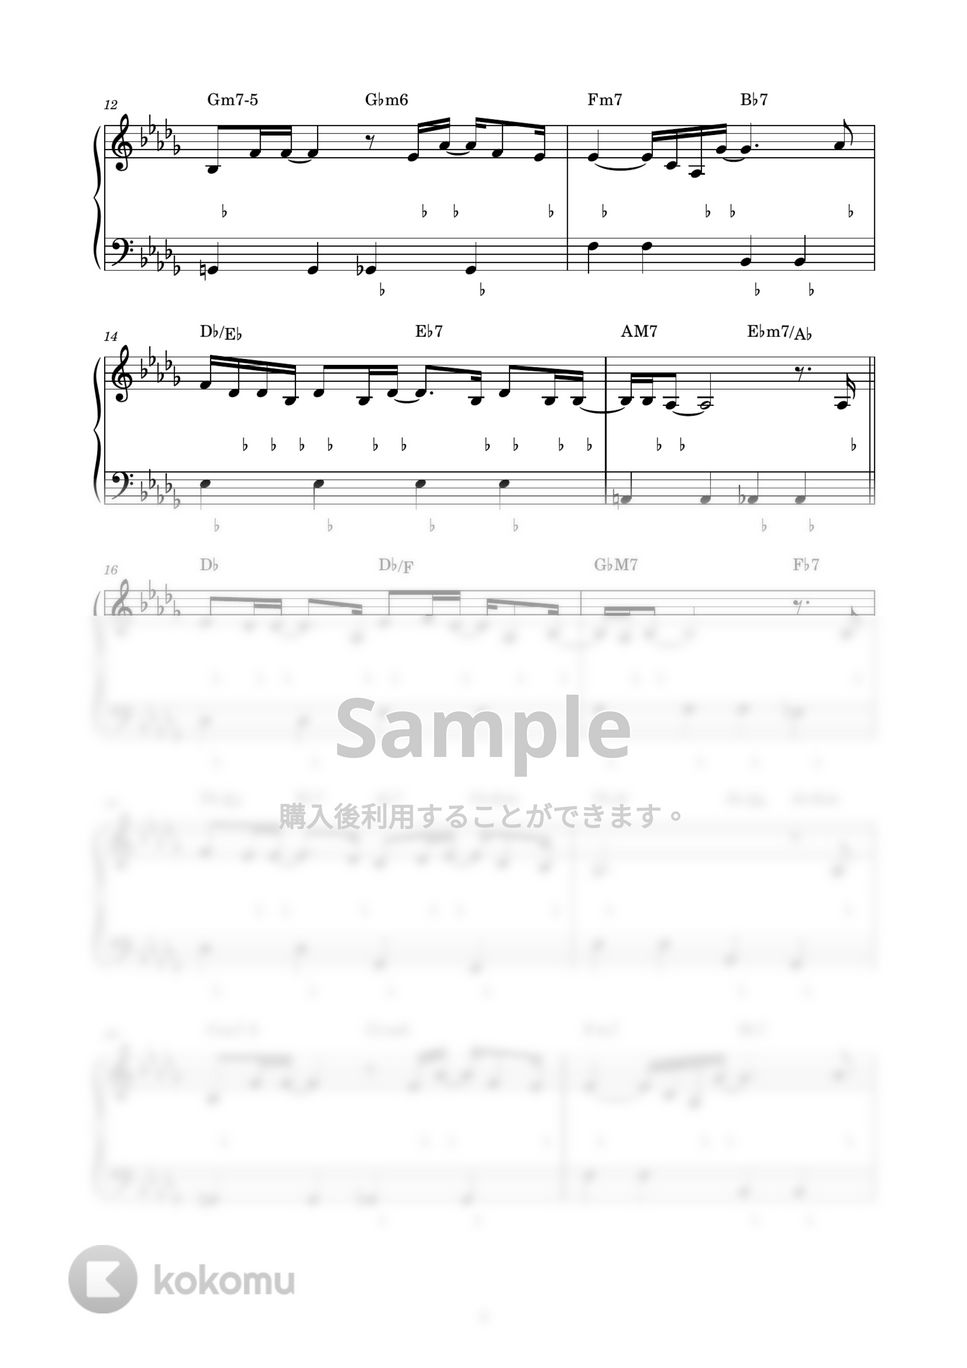 MISIA - Everything (ピアノ楽譜 / かんたん両手 / 歌詞付き / ドレミ付き / 初心者向き) by piano.tokyo